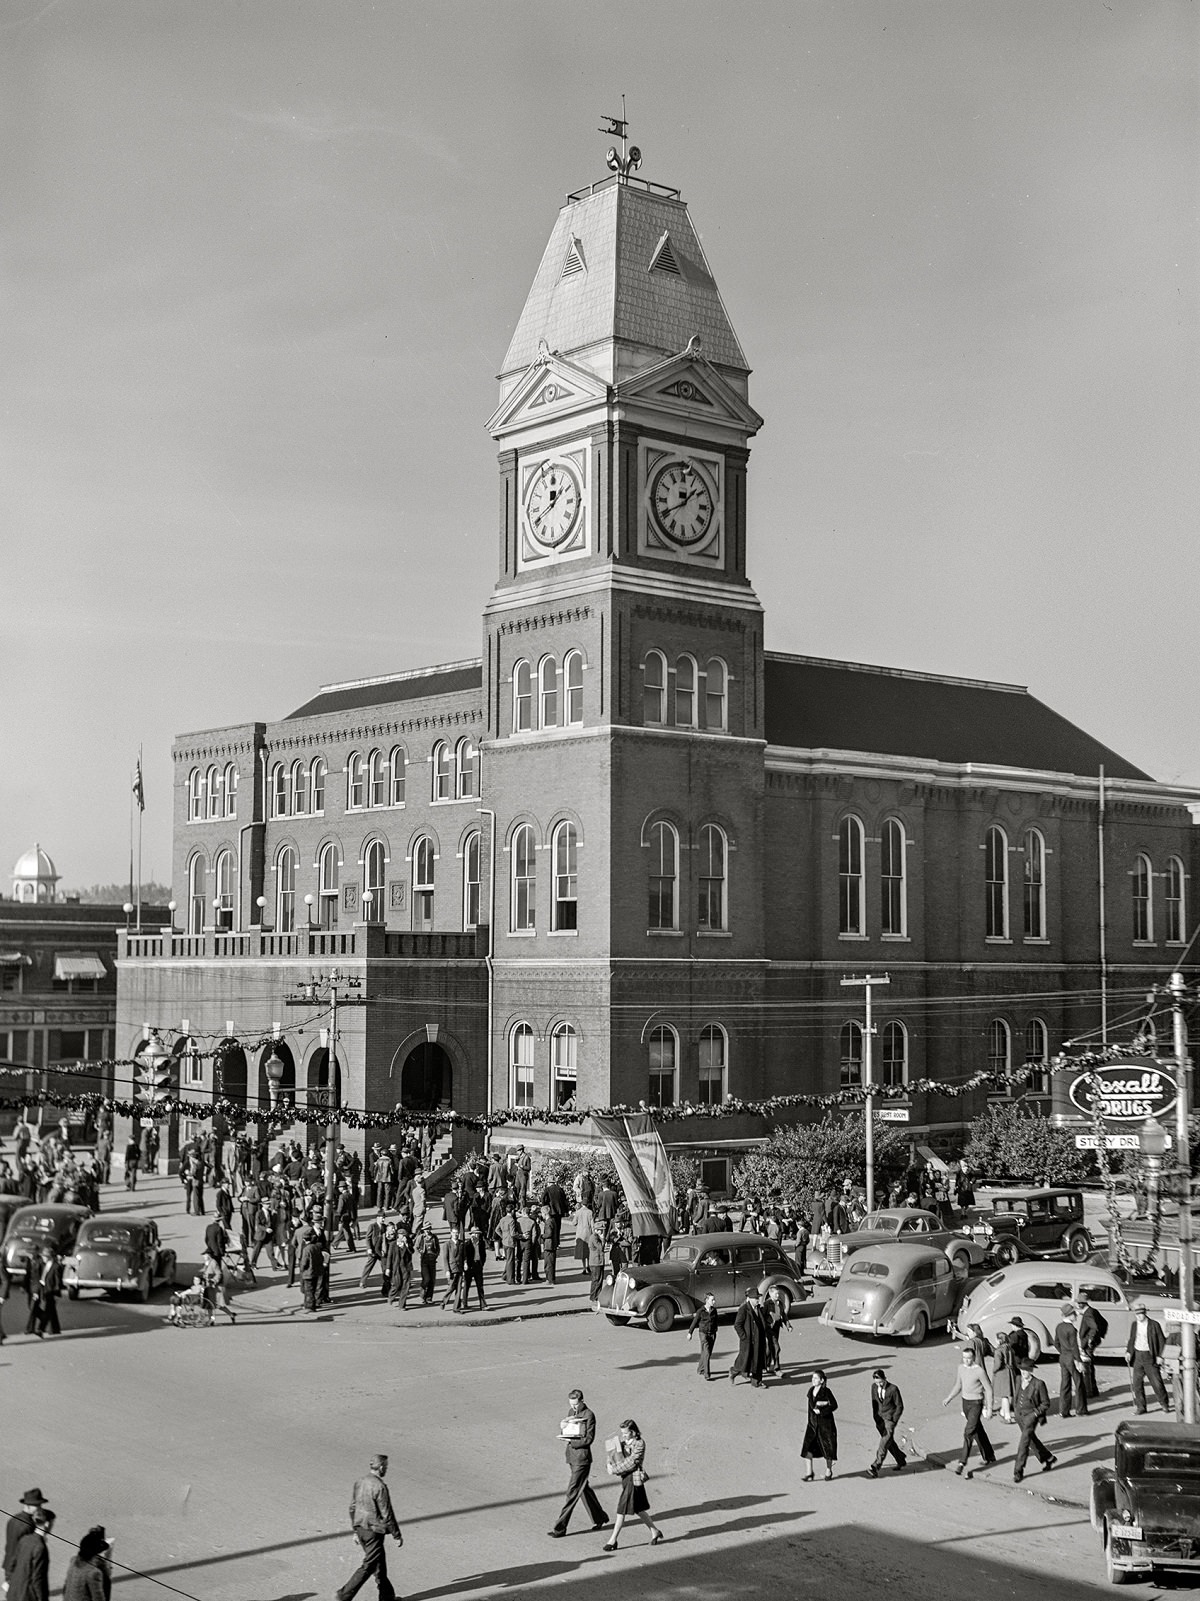 Etowah County Courthouse, Gadsden, Alabama, December, 1940.